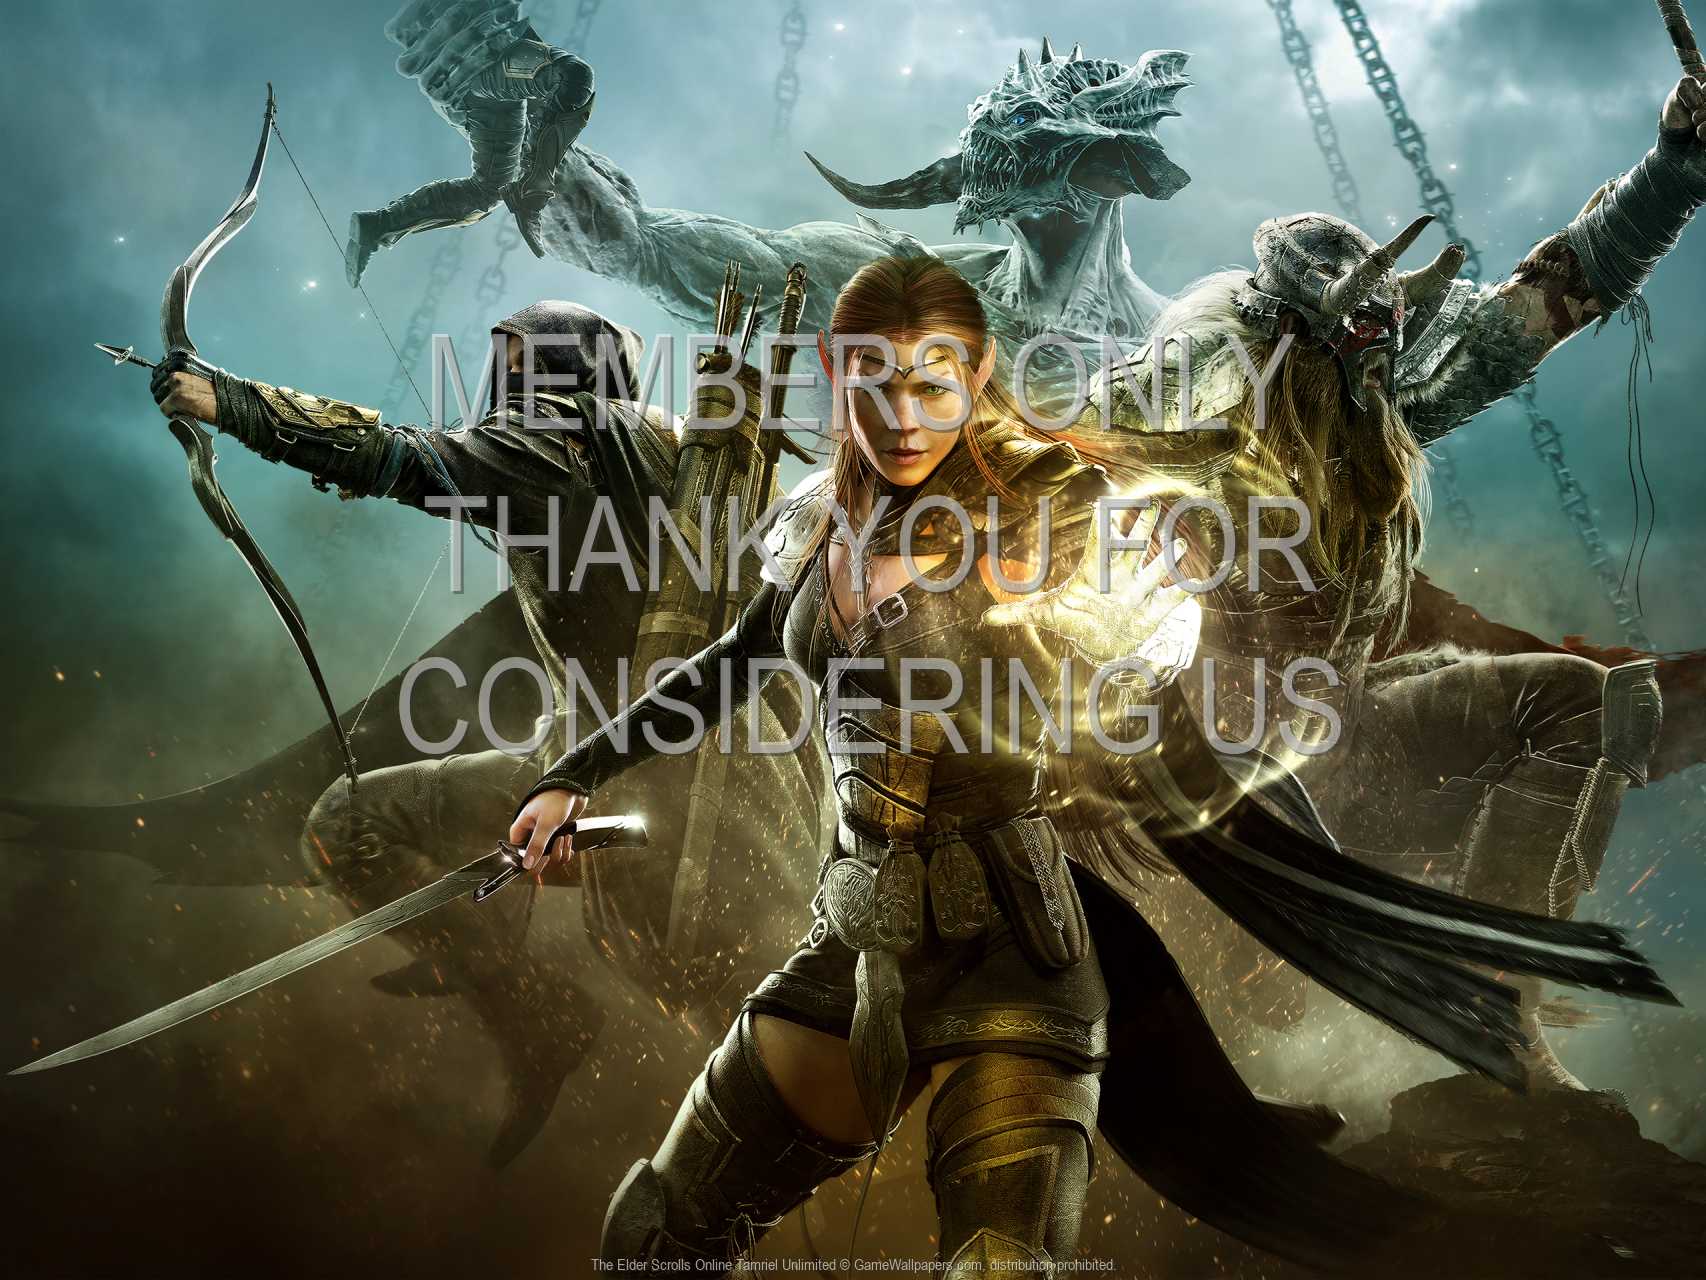 The Elder Scrolls Online: Tamriel Unlimited 720p Horizontal Mobile wallpaper or background 01